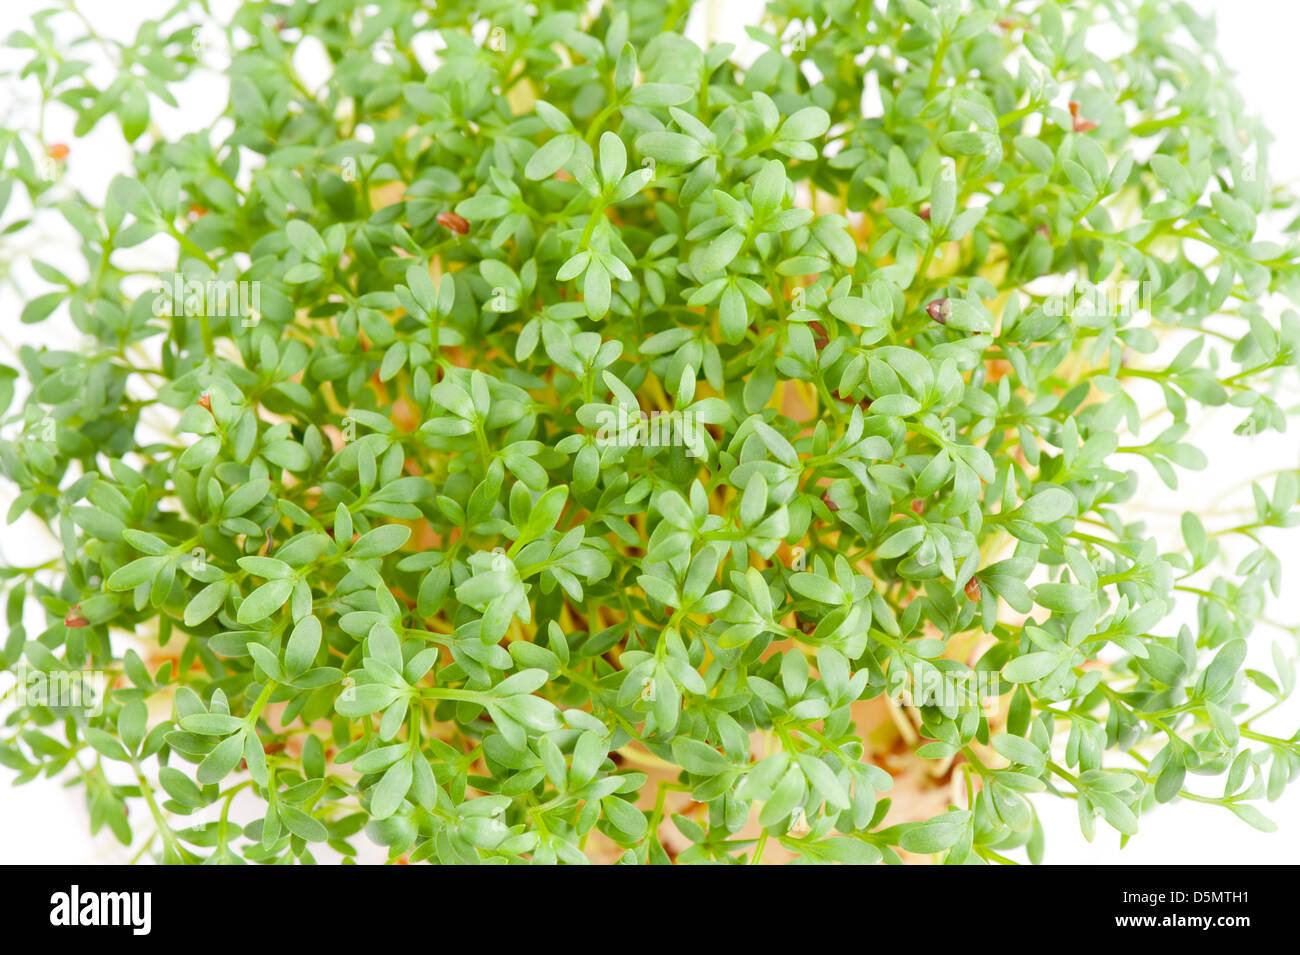 Sprouts of Lepidium sativum or cress plants Stock Photo